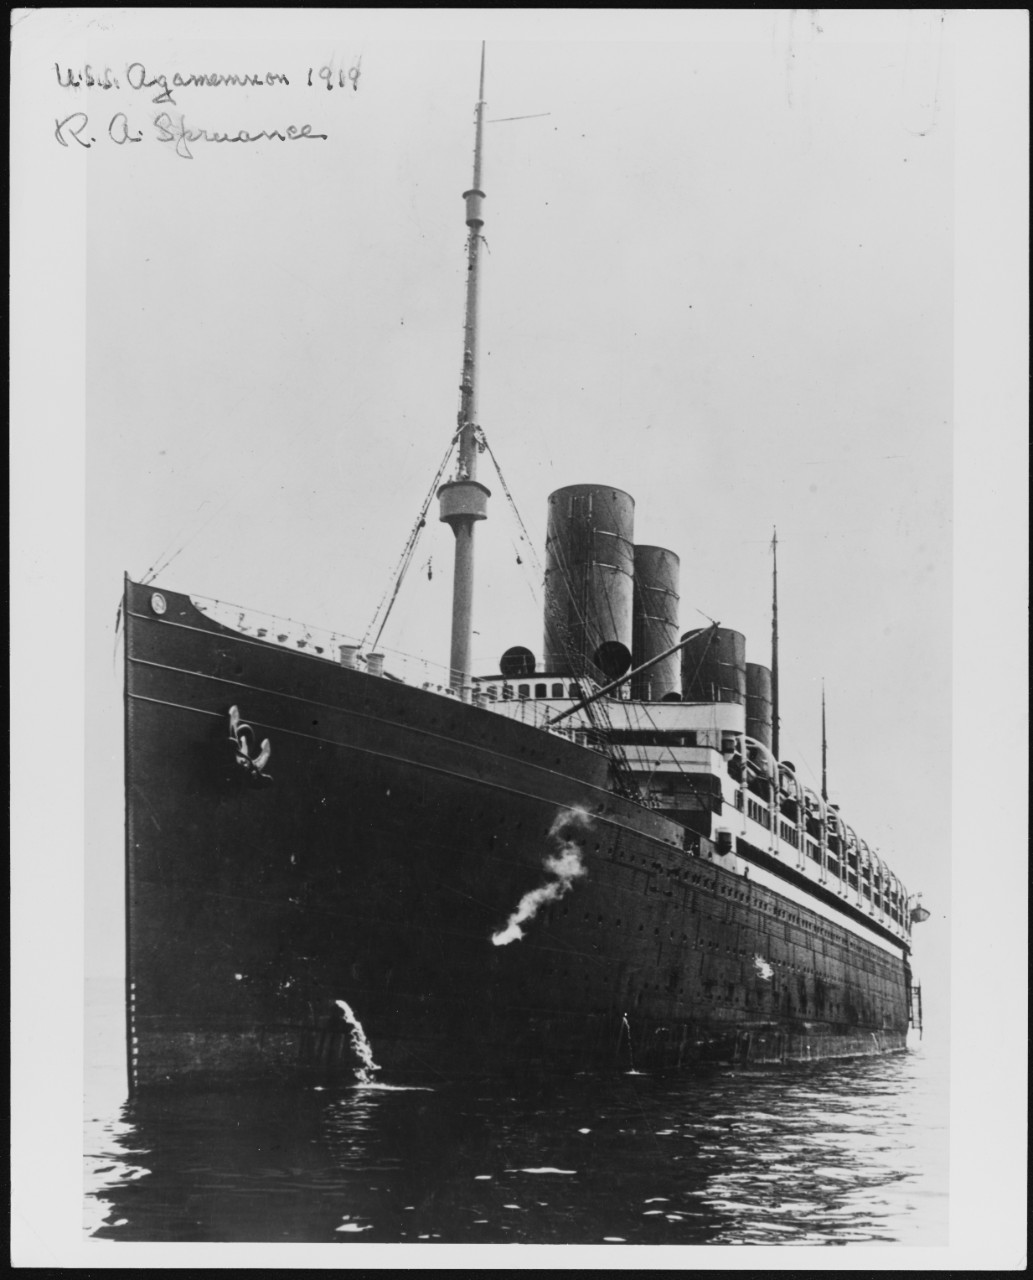 USS AGAMEMNON. 1919 R.A. Spruance